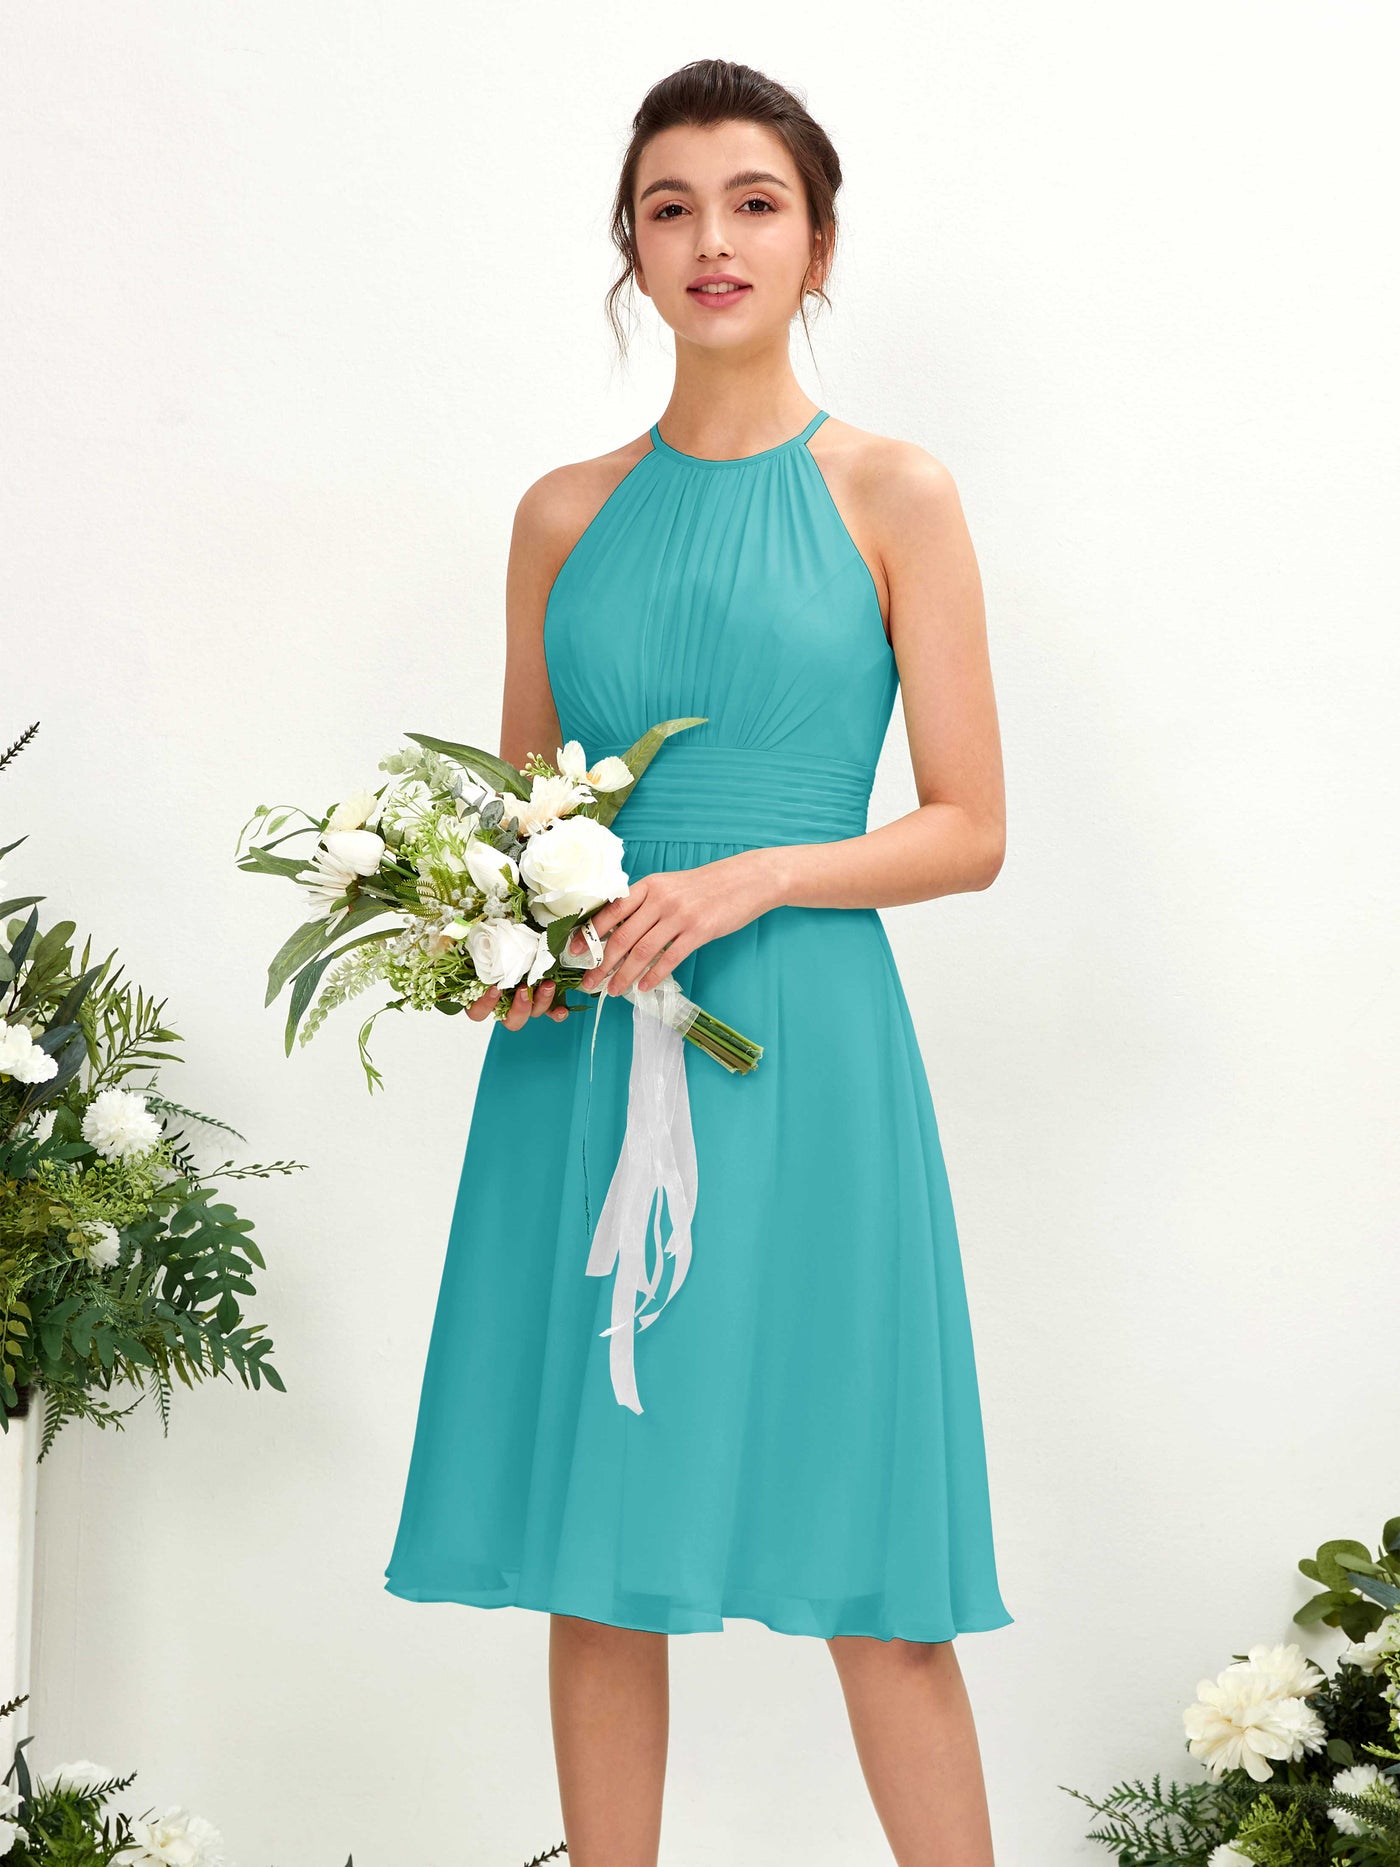 Turquoise Bridesmaid Dresses Bridesmaid Dress A-line Chiffon Halter Knee Length Sleeveless Wedding Party Dress (81220123)#color_turquoise